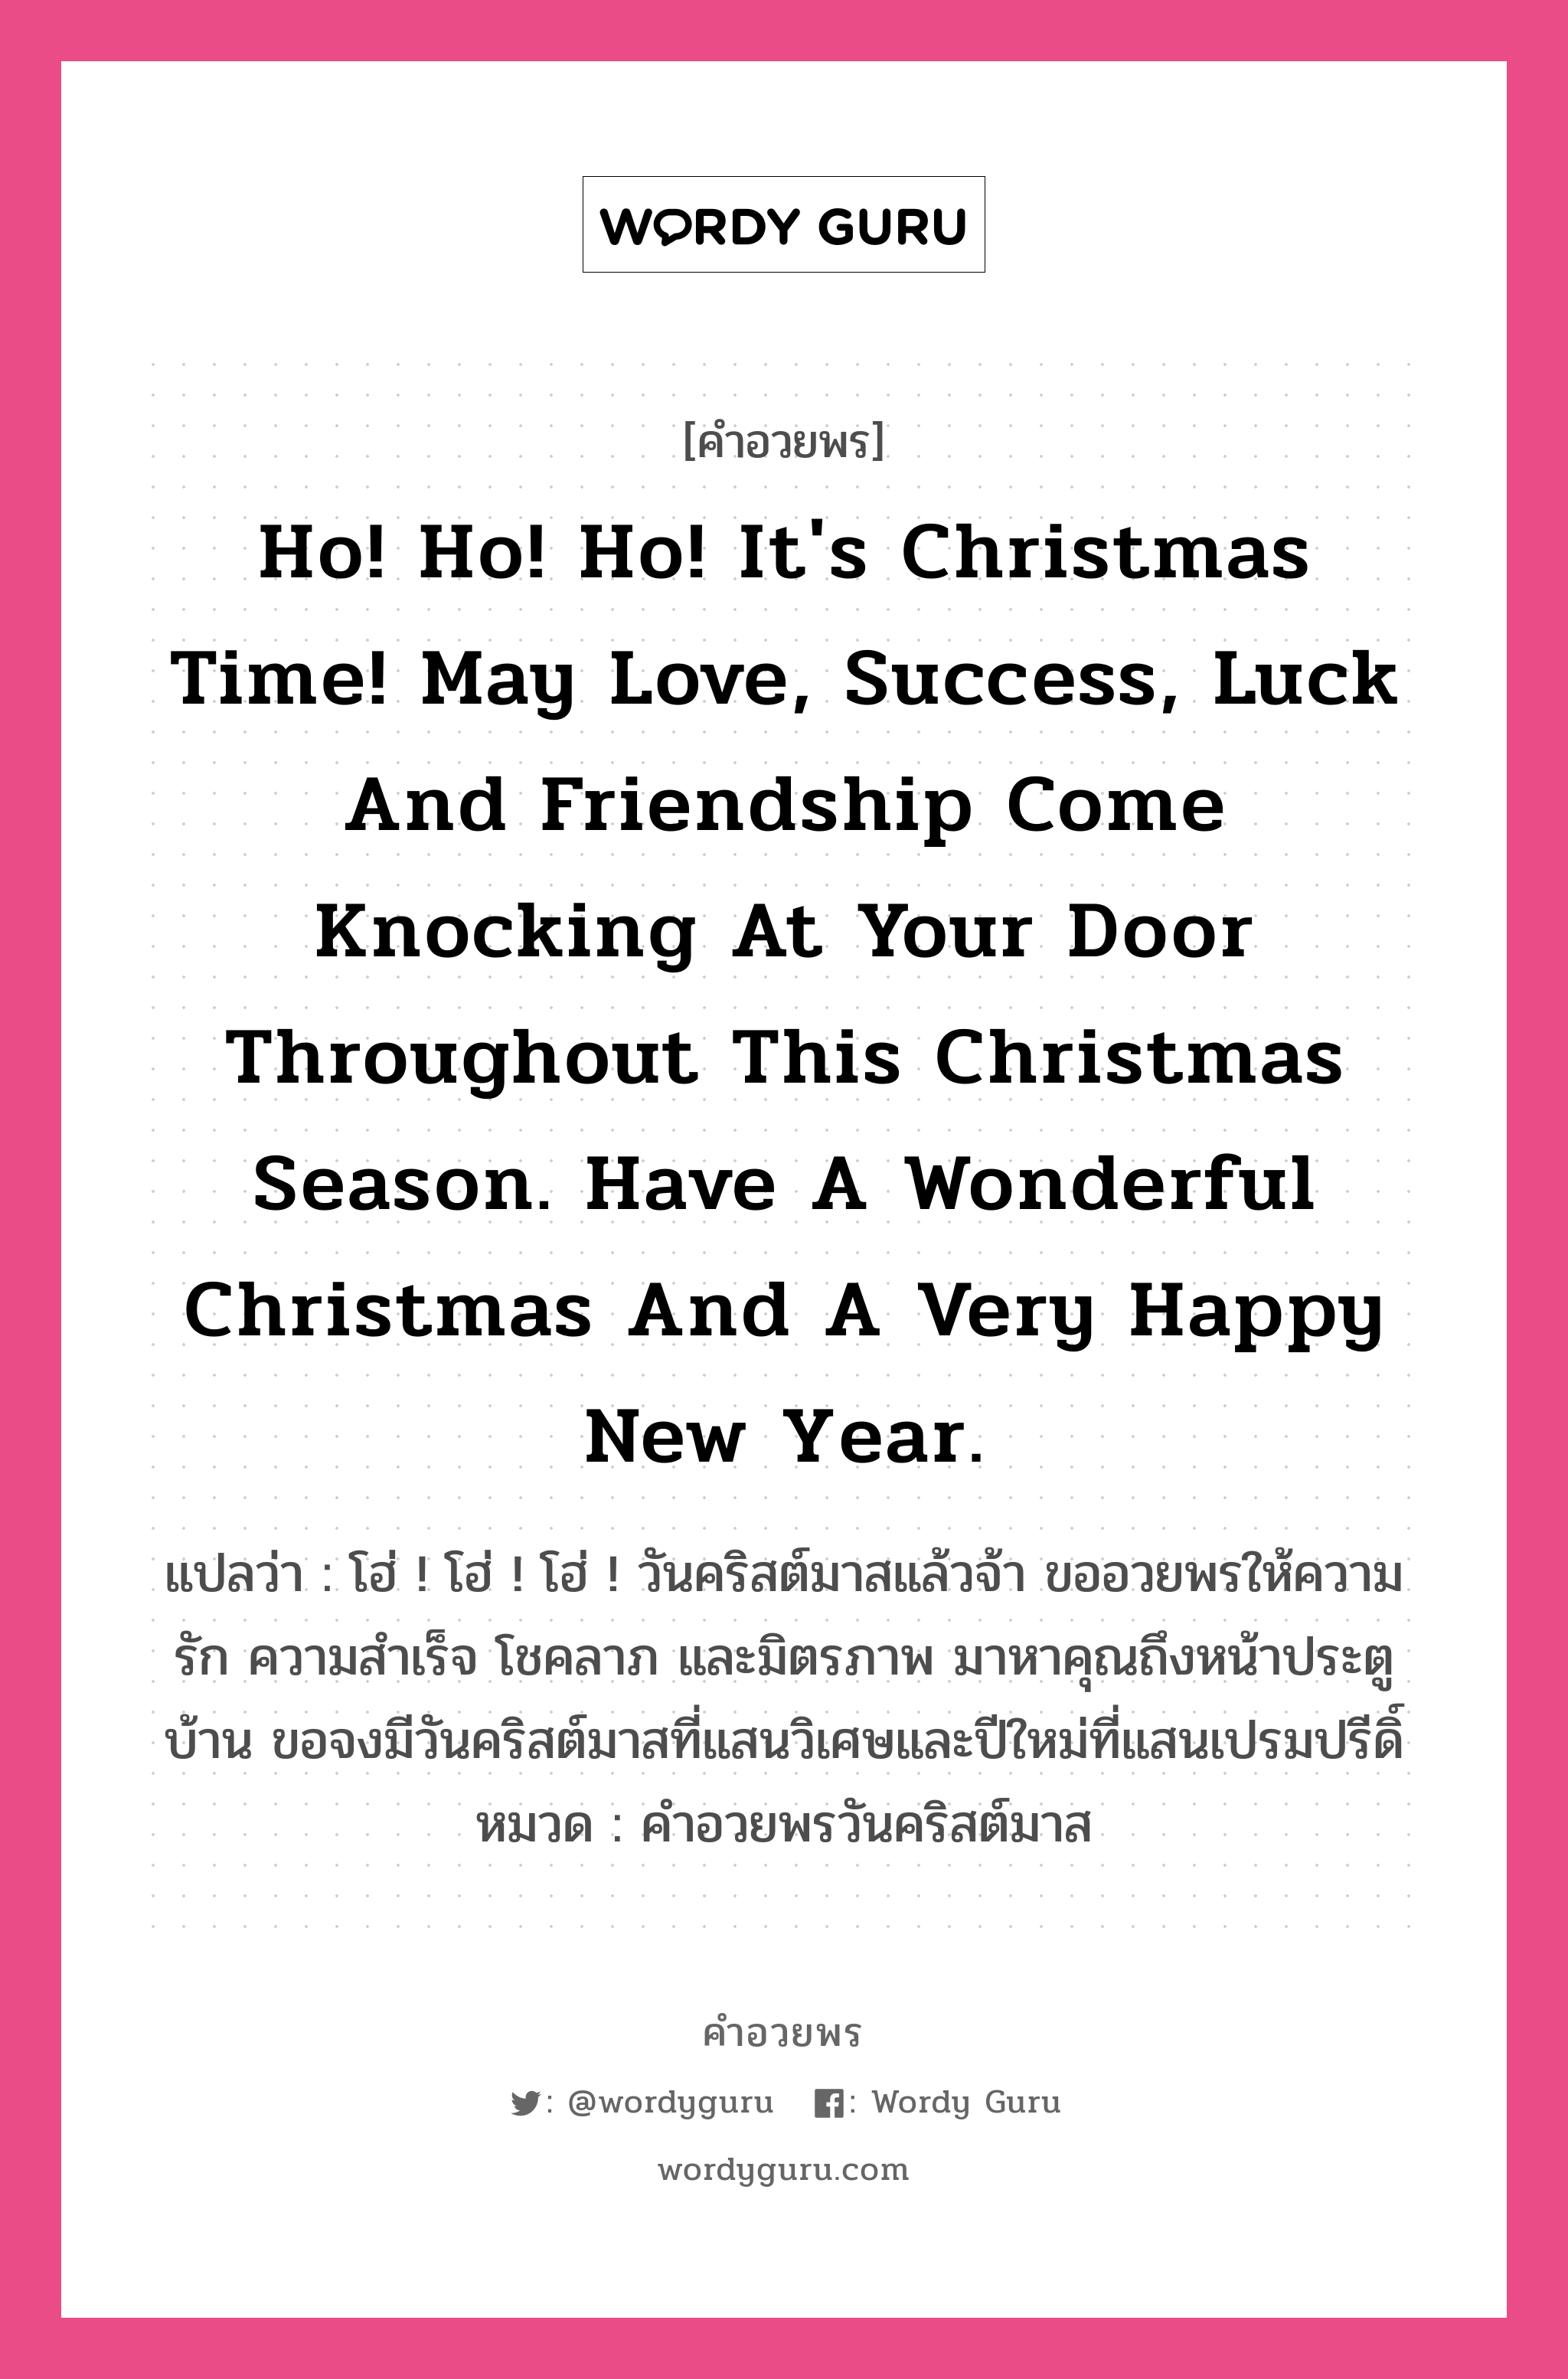 Ho! Ho! Ho! It's Christmas time! May love, success, luck and friendship come knocking at your door throughout this Christmas season. Have a wonderful Christmas and a very happy New Year. คำศัพท์ในกลุ่มประเภท คำอวยพรวันคริสต์มาส, แปลว่า โฮ่ ! โฮ่ ! โฮ่ ! วันคริสต์มาสแล้วจ้า ขออวยพรให้ความรัก ความสำเร็จ โชคลาภ และมิตรภาพ มาหาคุณถึงหน้าประตูบ้าน ขอจงมีวันคริสต์มาสที่แสนวิเศษและปีใหม่ที่แสนเปรมปรีดิ์ หมวด คำอวยพรวันคริสต์มาส หมวด คำอวยพรวันคริสต์มาส